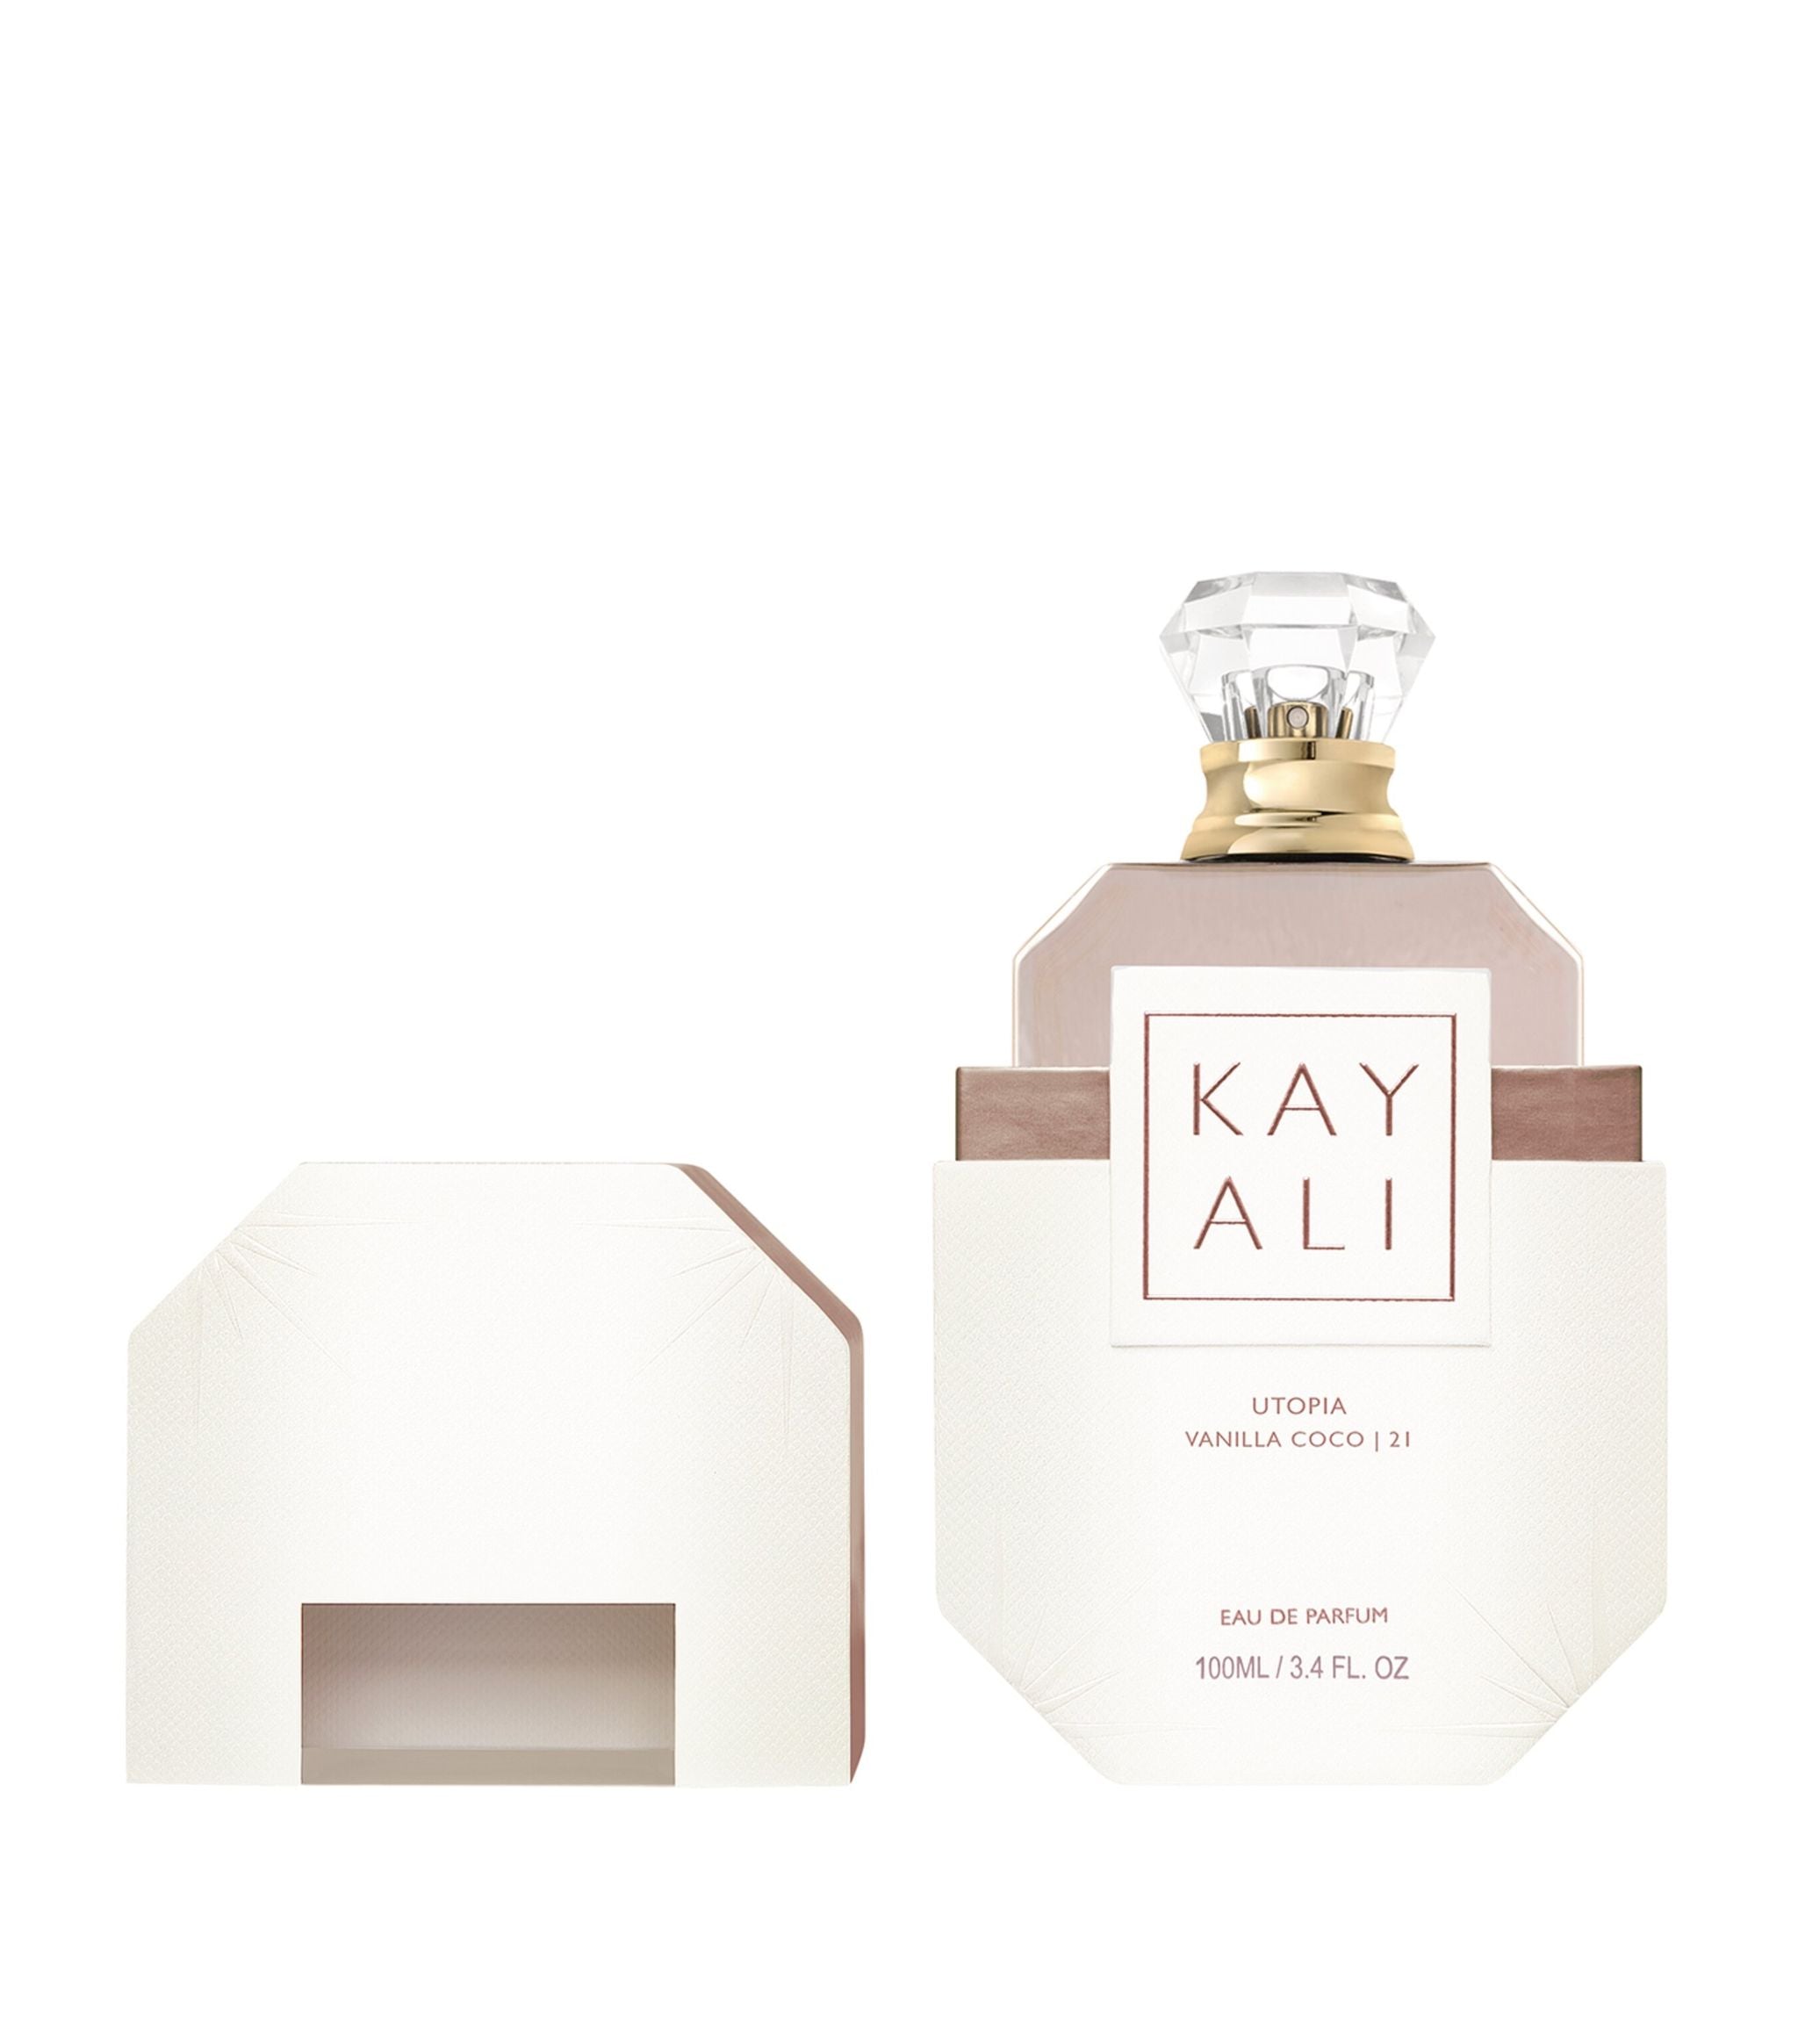 Kayali Utopia Vanilla Coco, 21 Fragrance Review